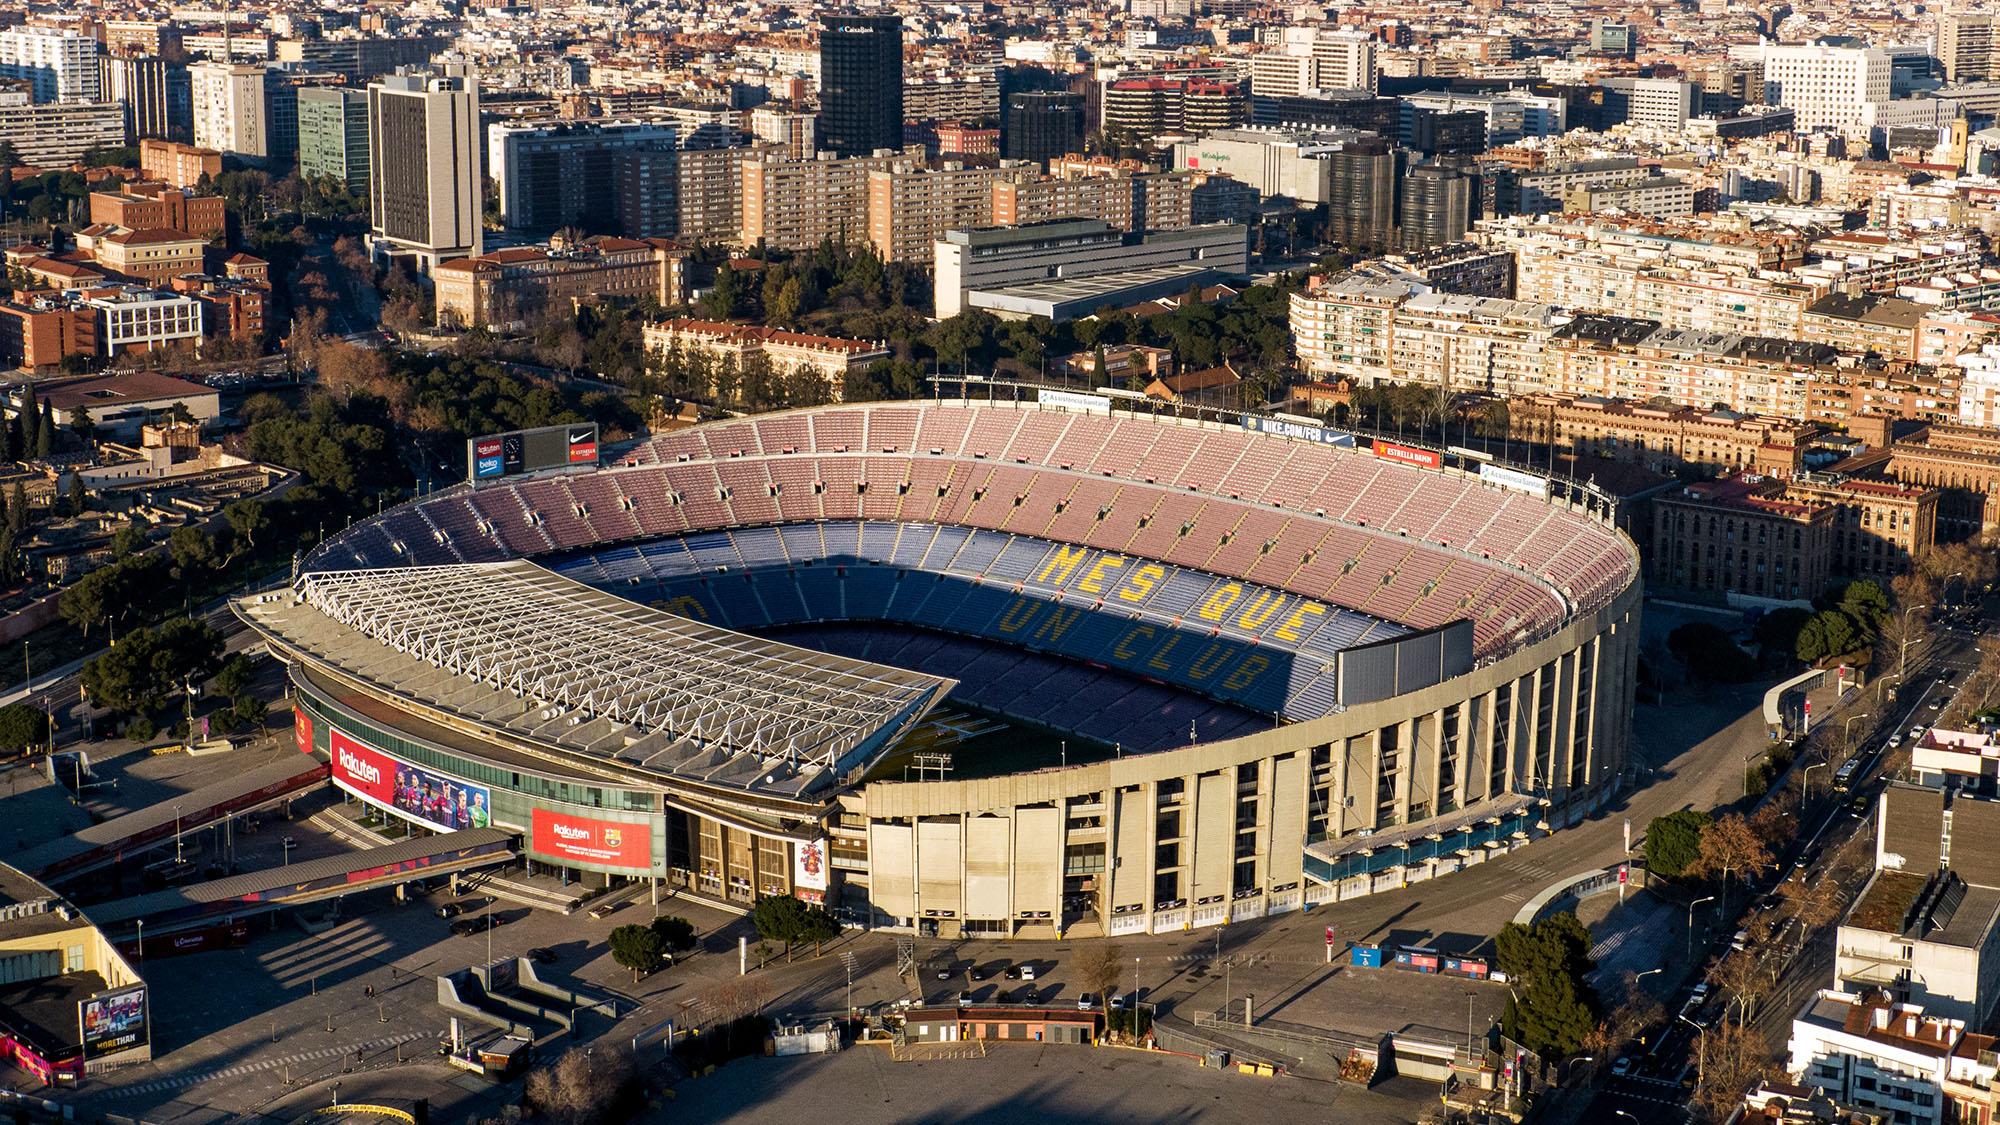 Stadion FC Barcelona